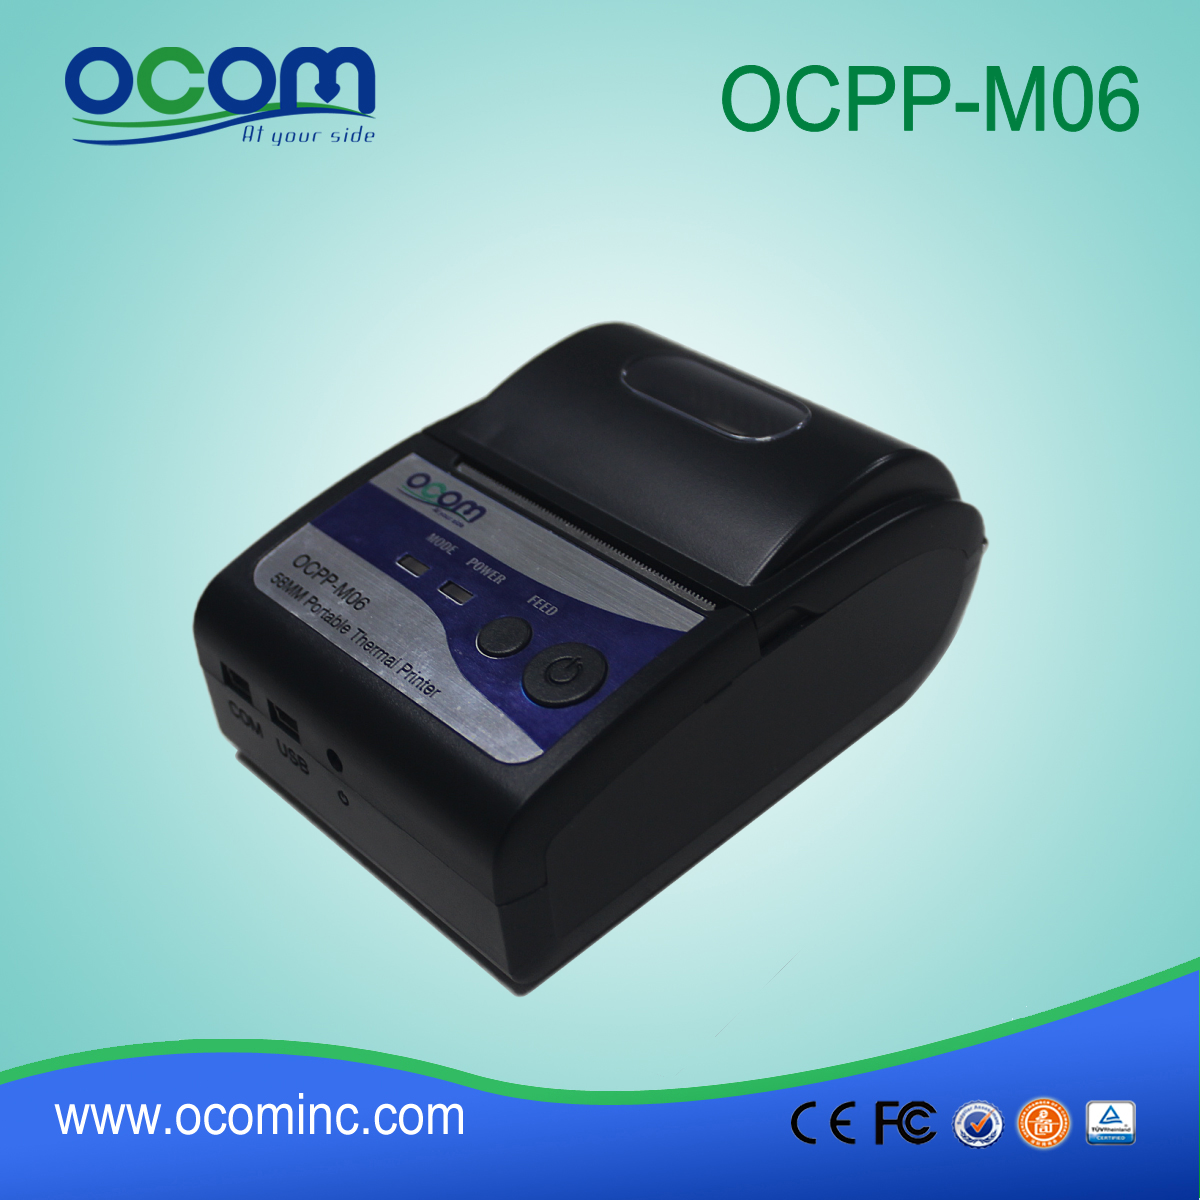 (OCPP-М06) OCOM 2 015 Горячая продажа андроид карманный принтер, карманный принтер для продажи